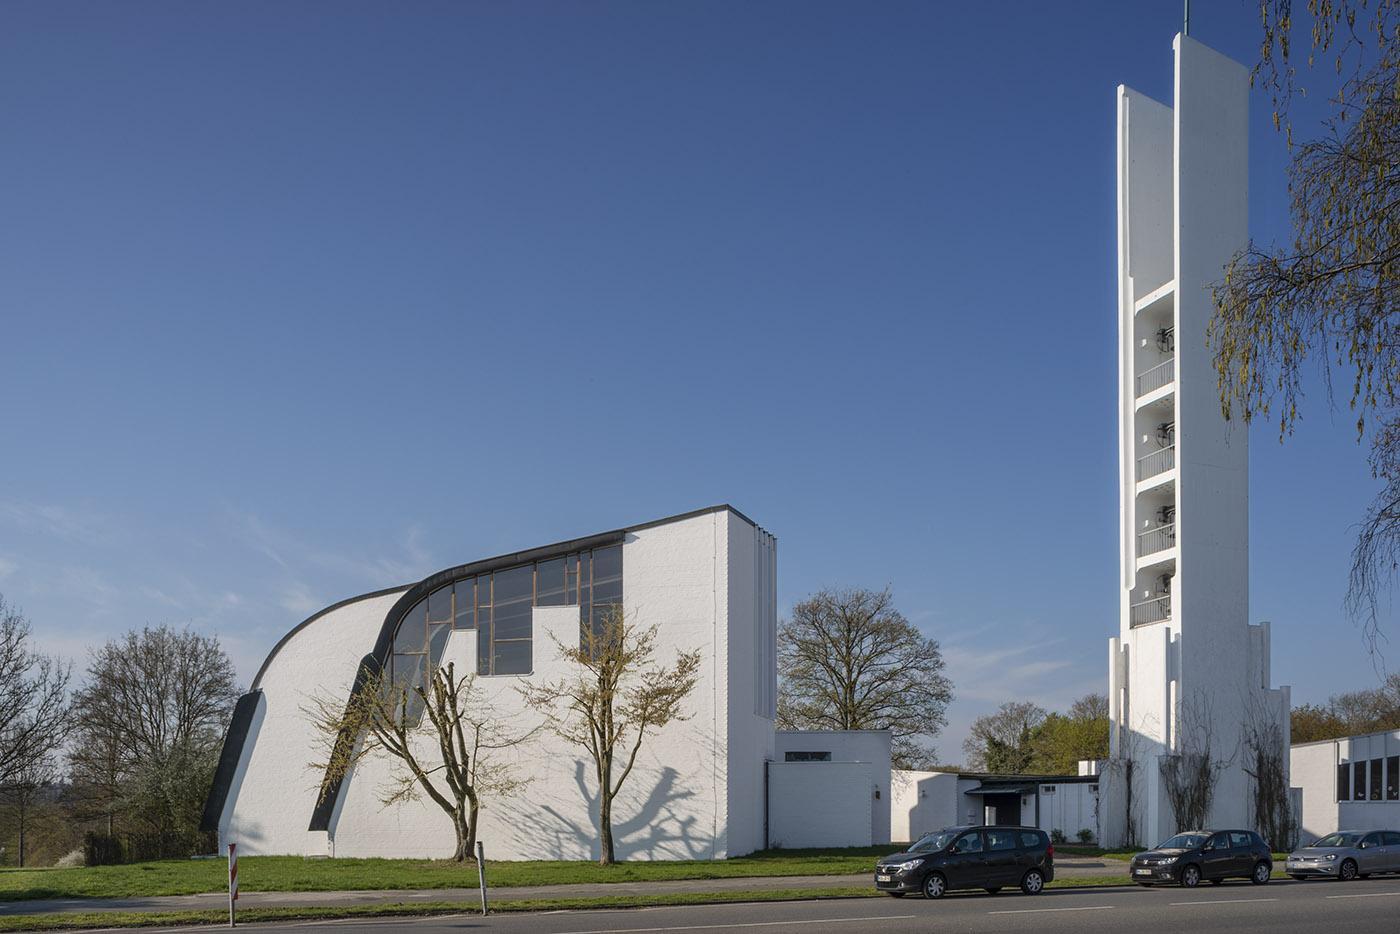 The Wolfsburg church and the parish building